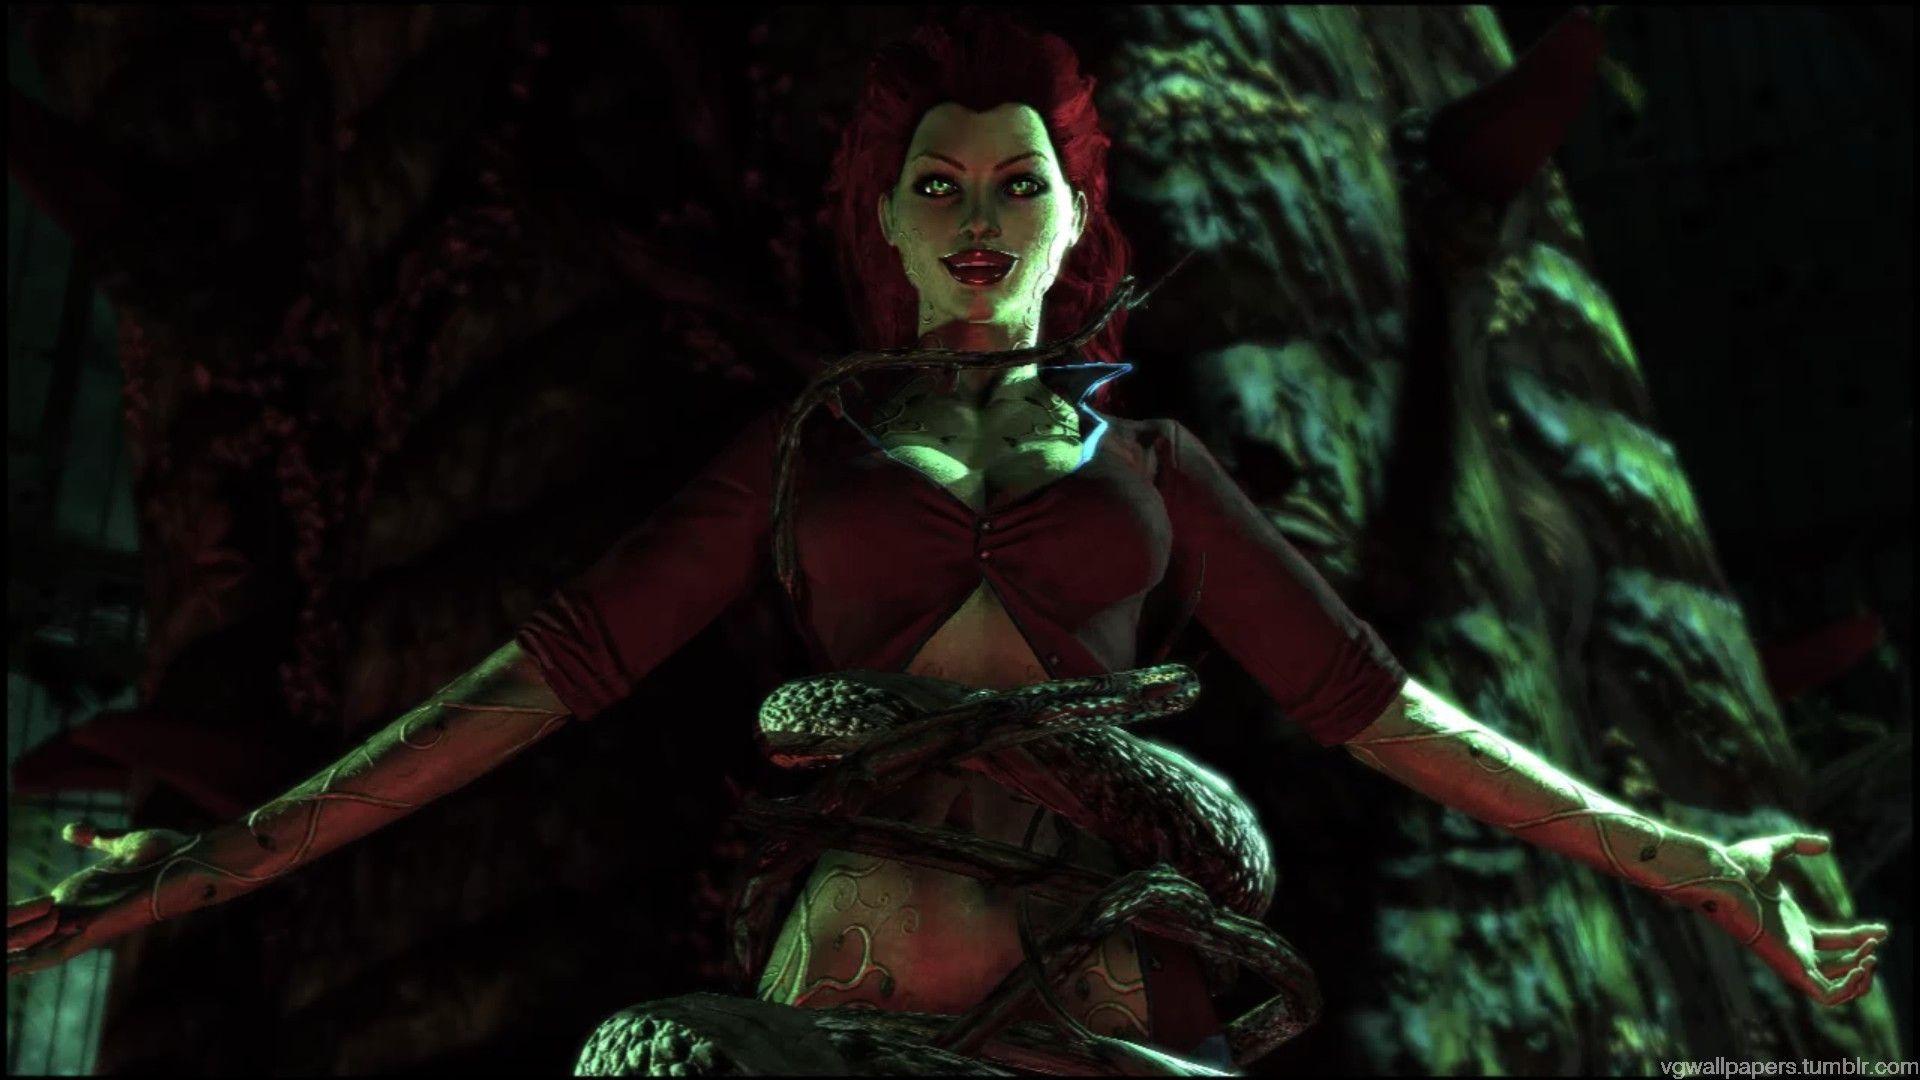 Video Game Wallpaper, Poison Ivy screenshot from The Batman